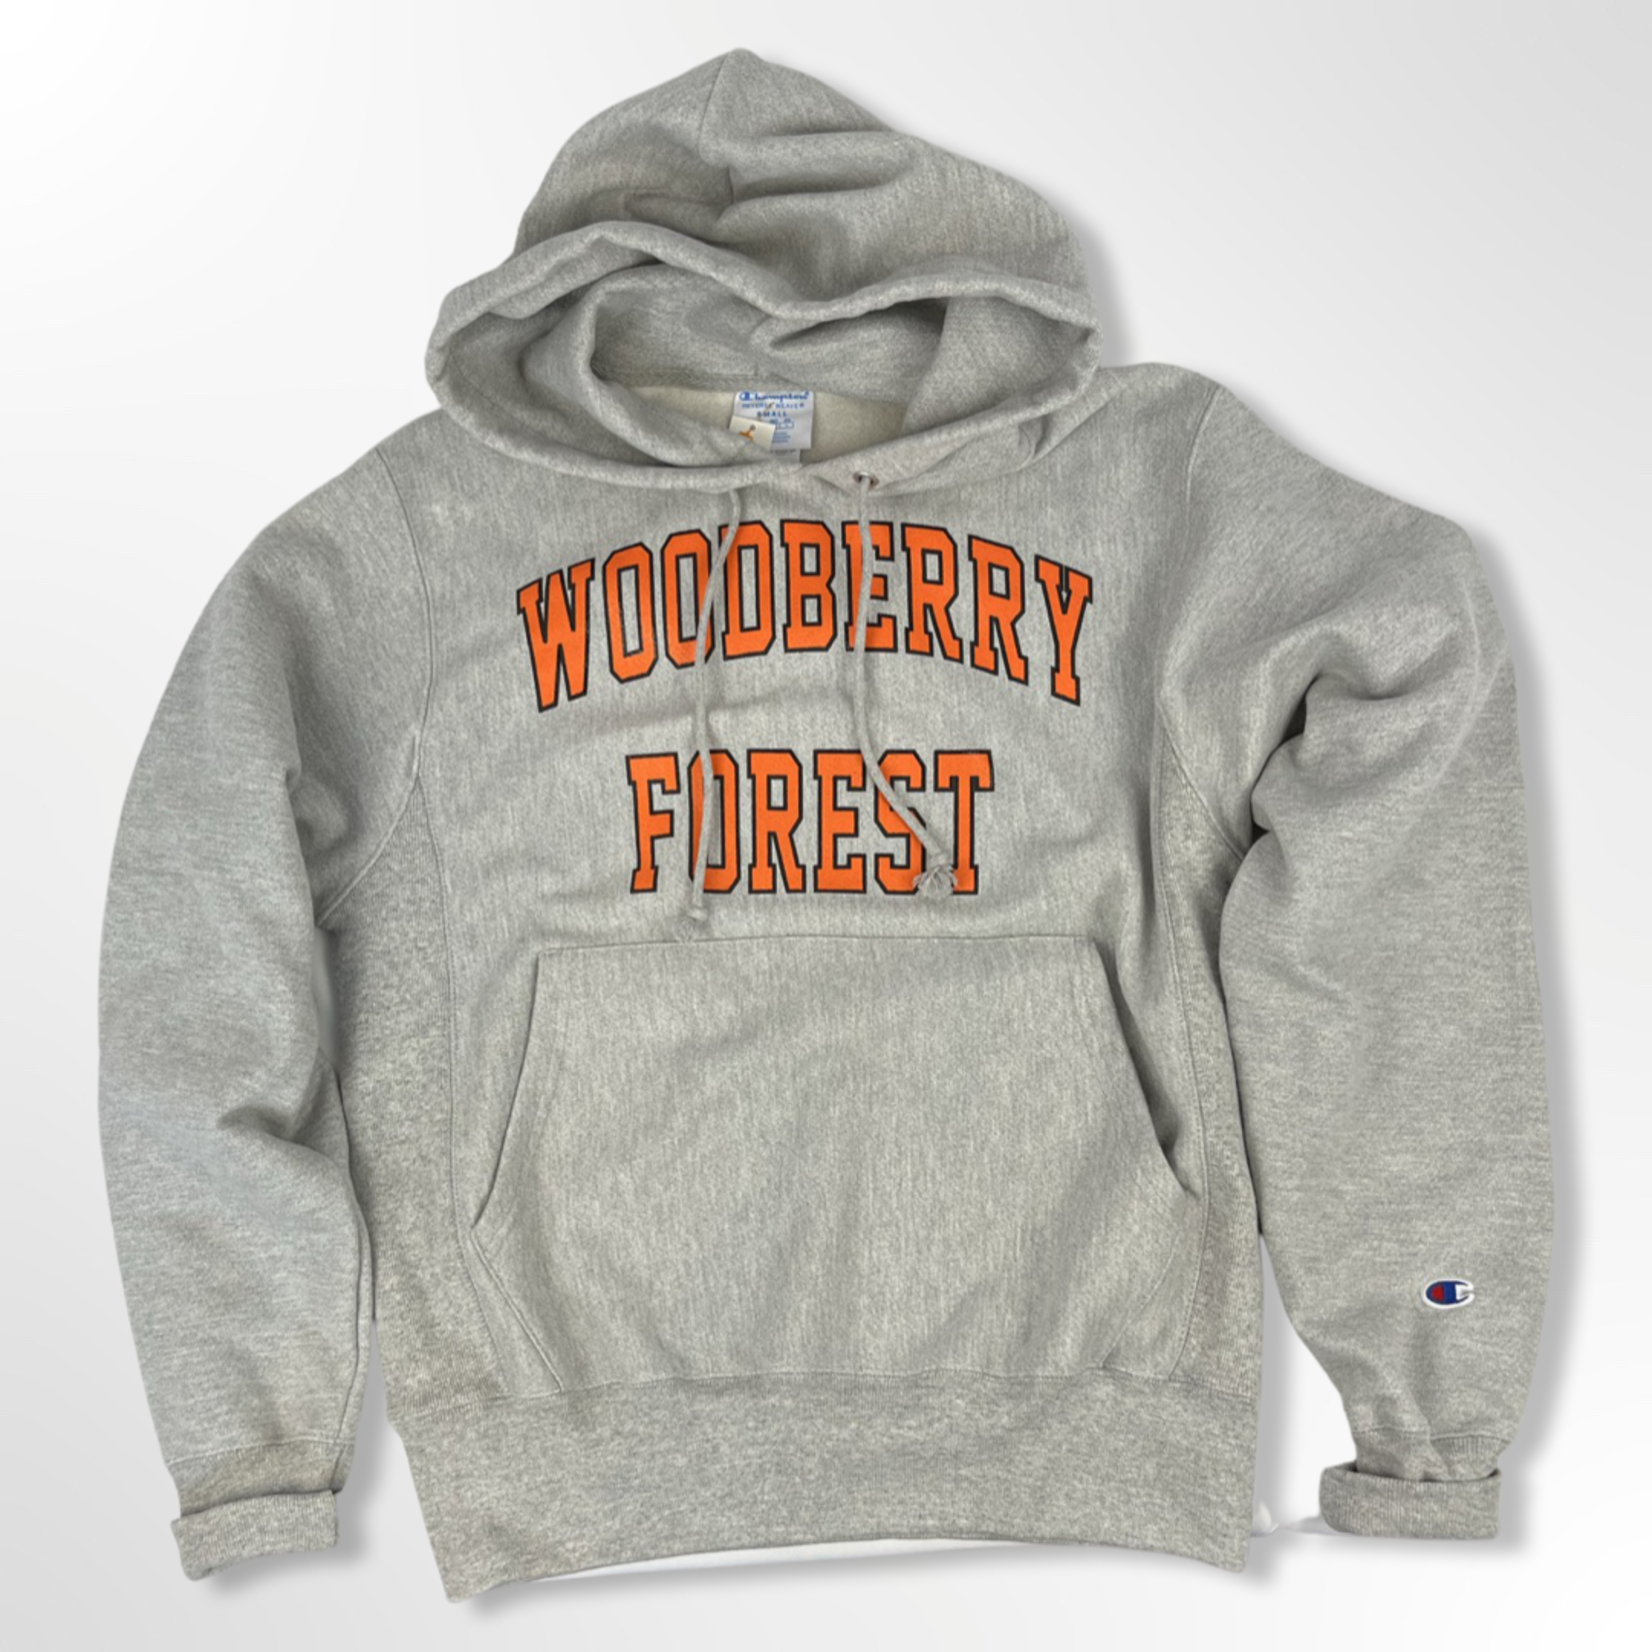 Champion School Woodberry - Store Hooded Sweatshirt